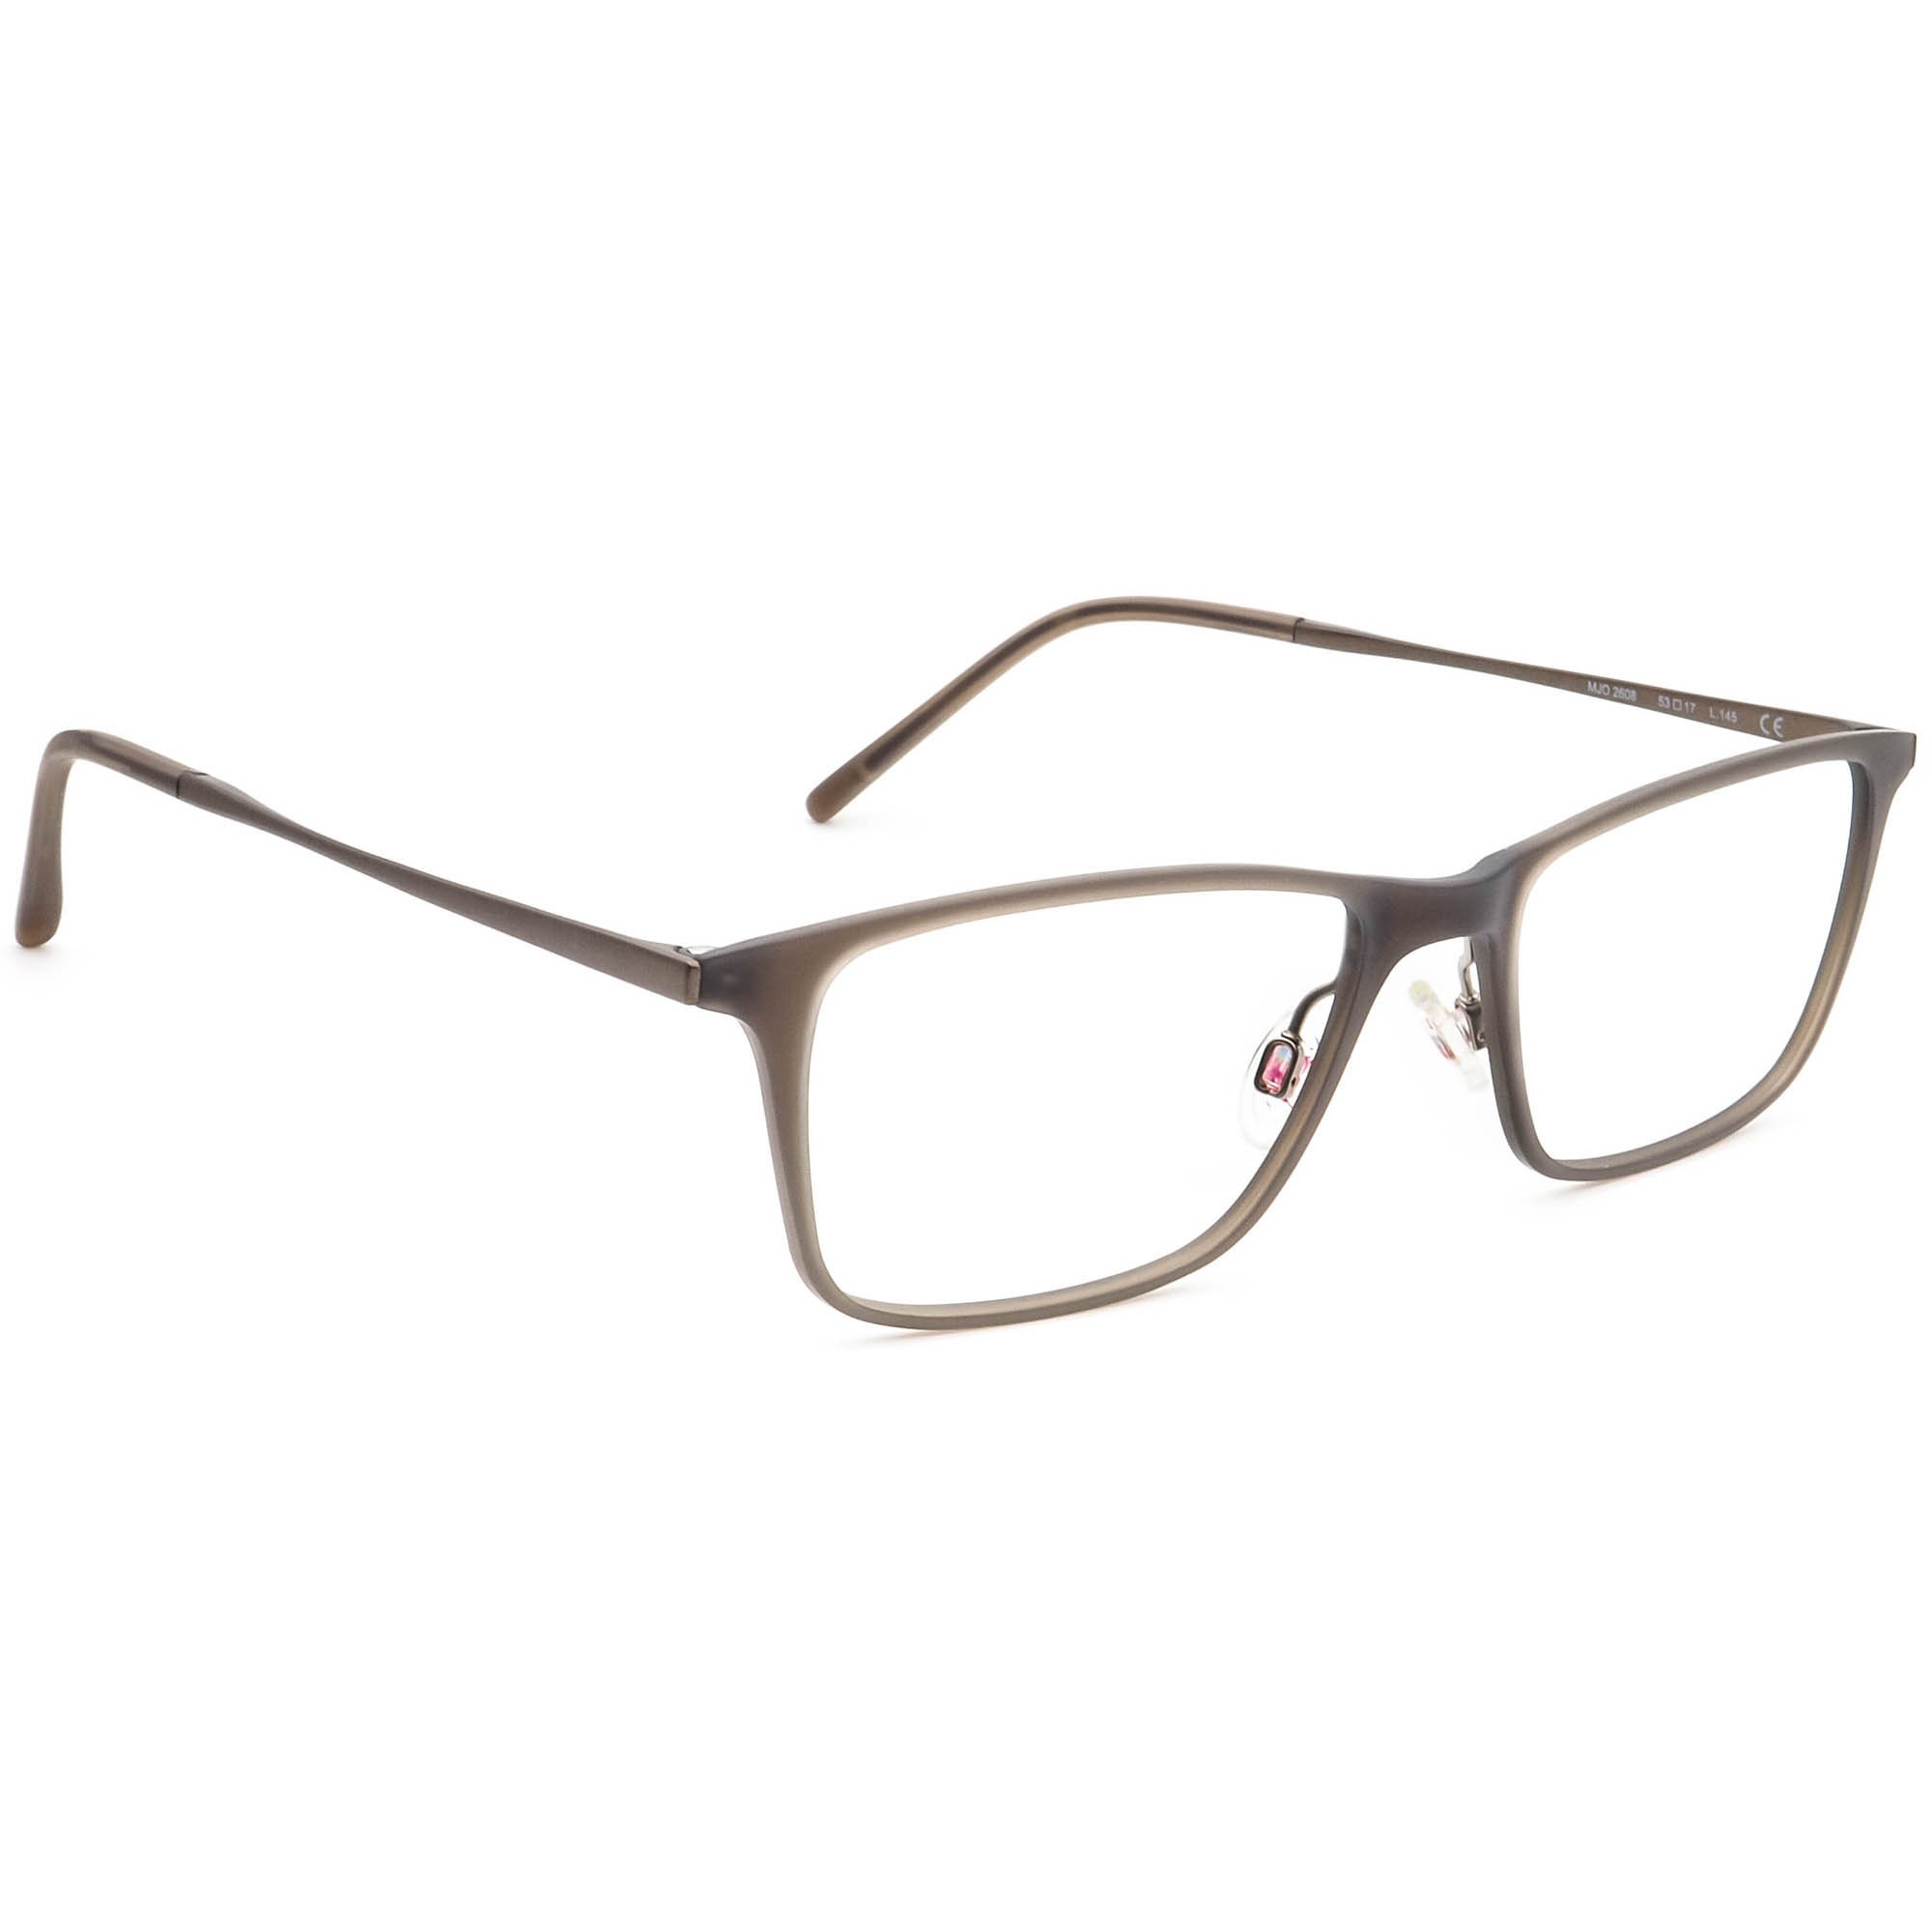 Chanel Eyeglasses 3057 C.713 Brown/black/gold Rectangular -  Israel